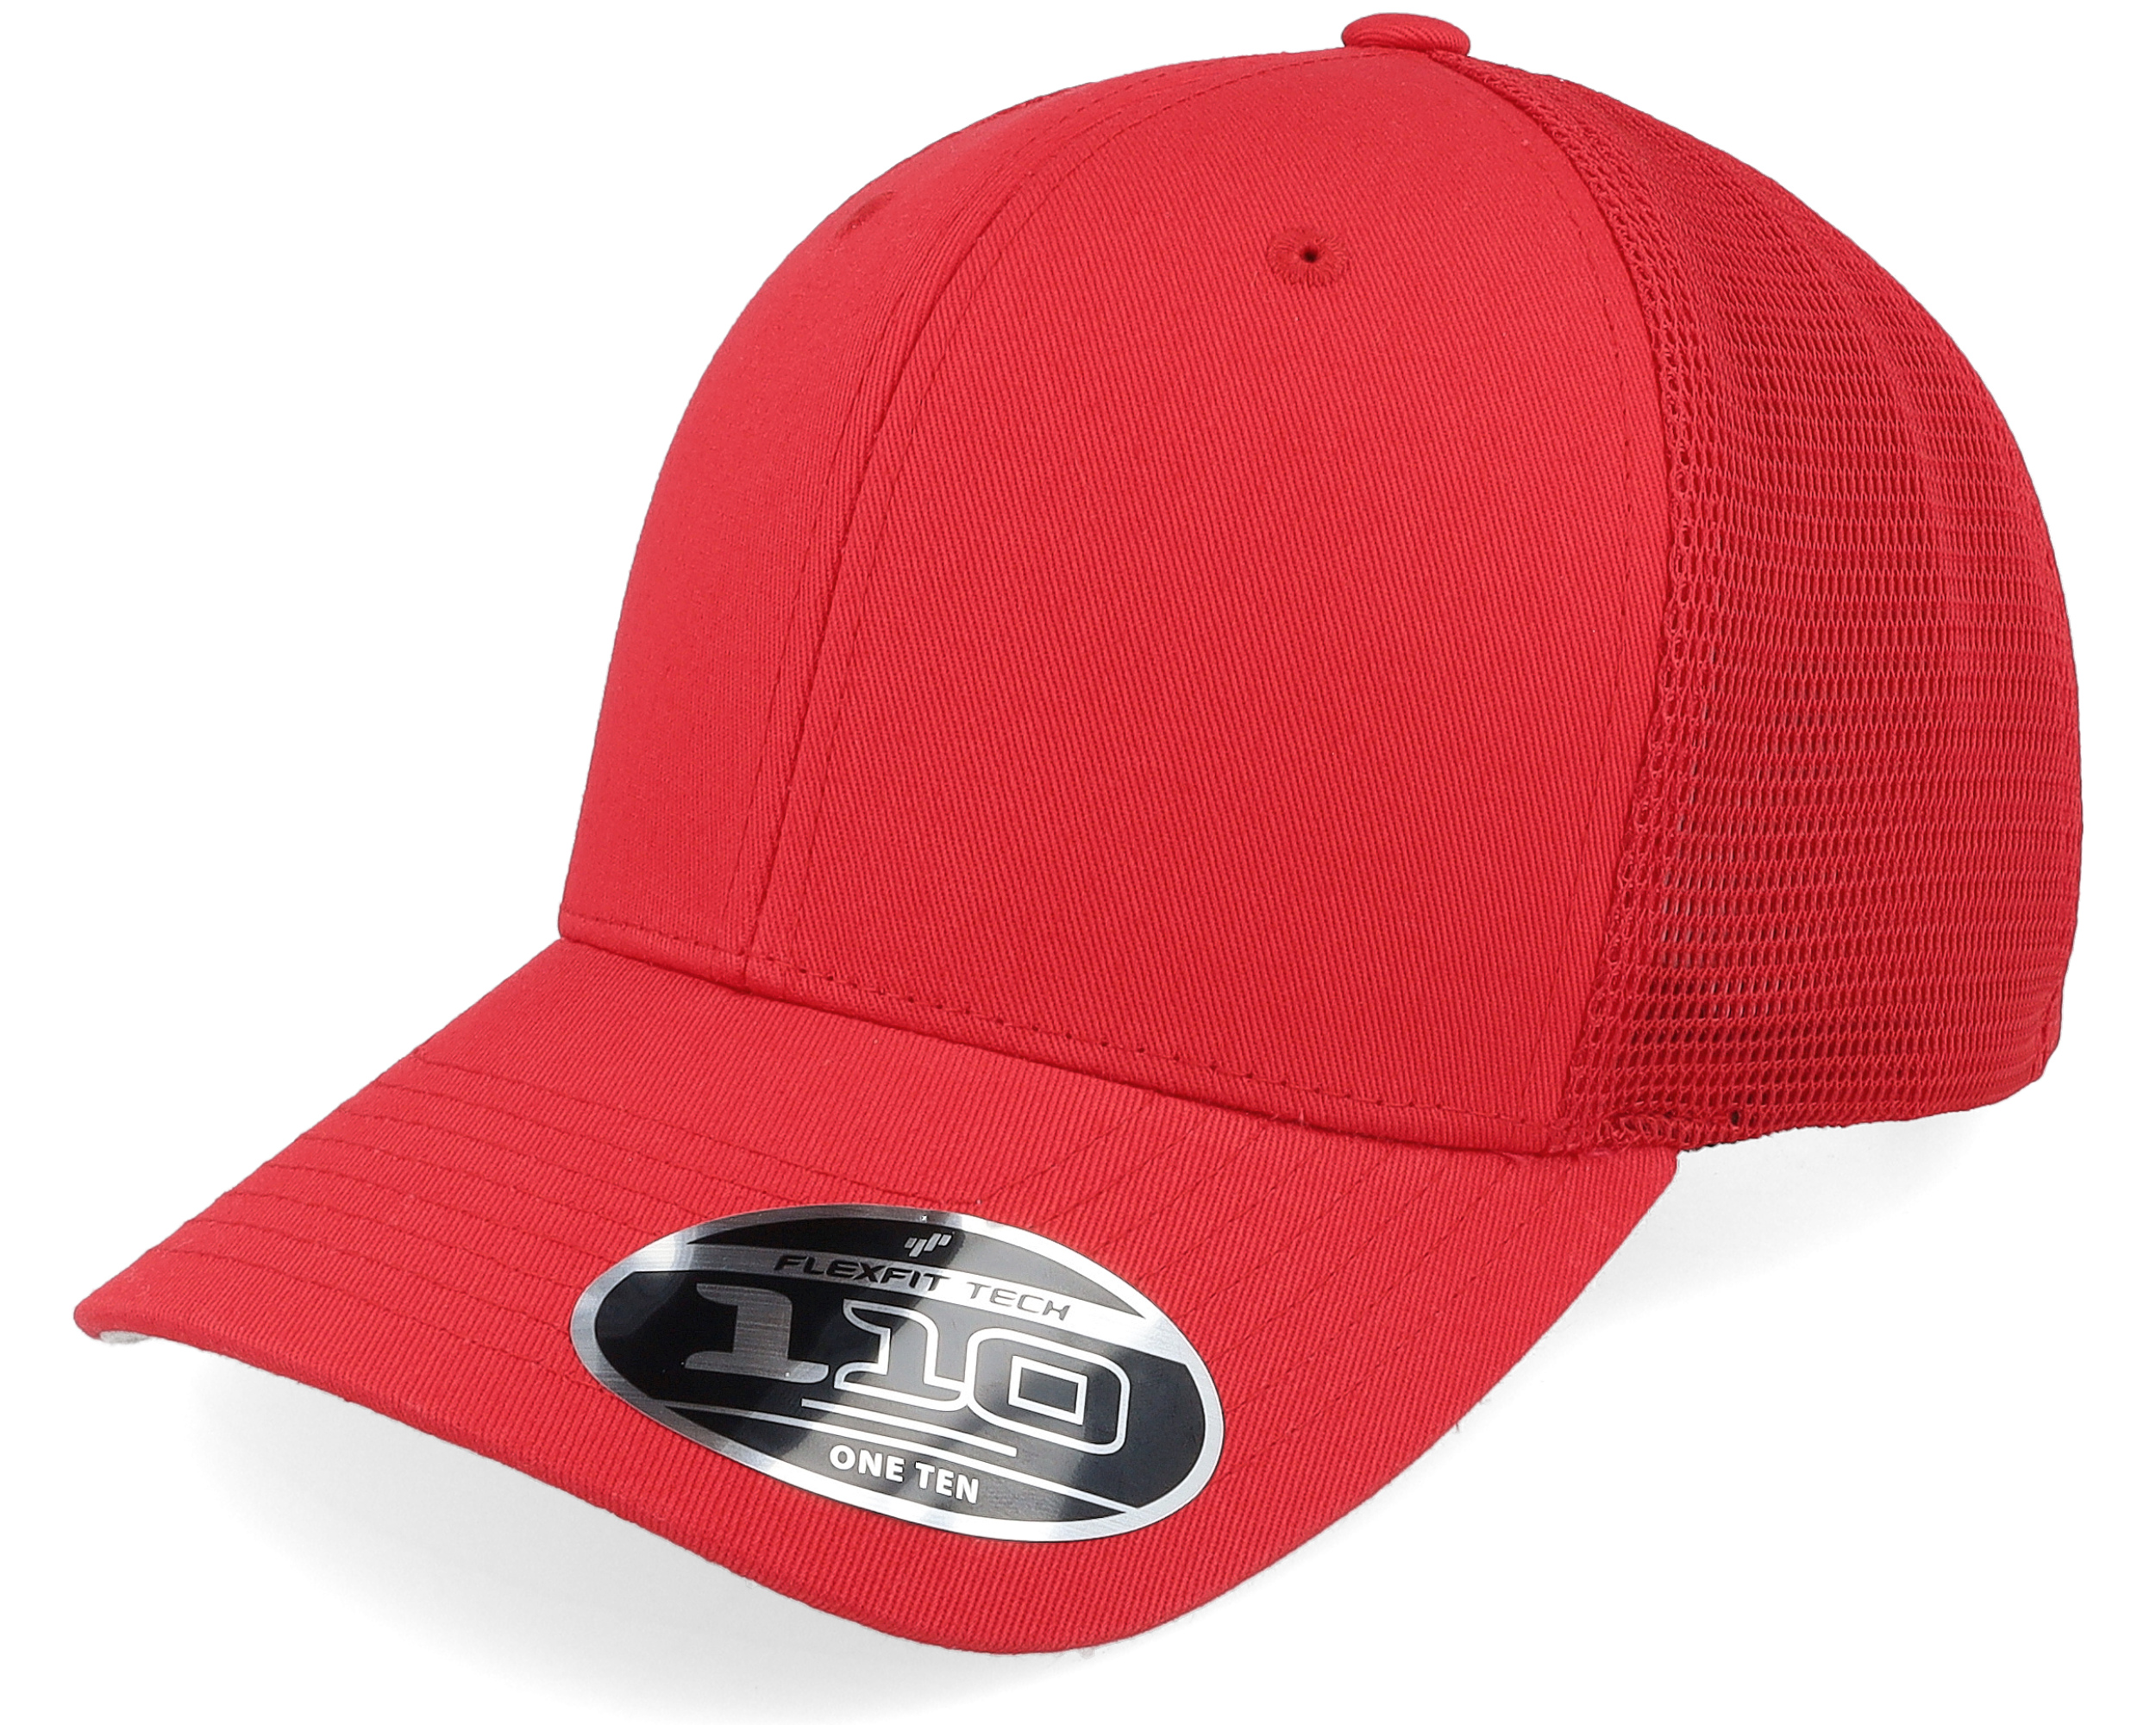 Red Mesh Cap - Trucker Flexfit 110 cap